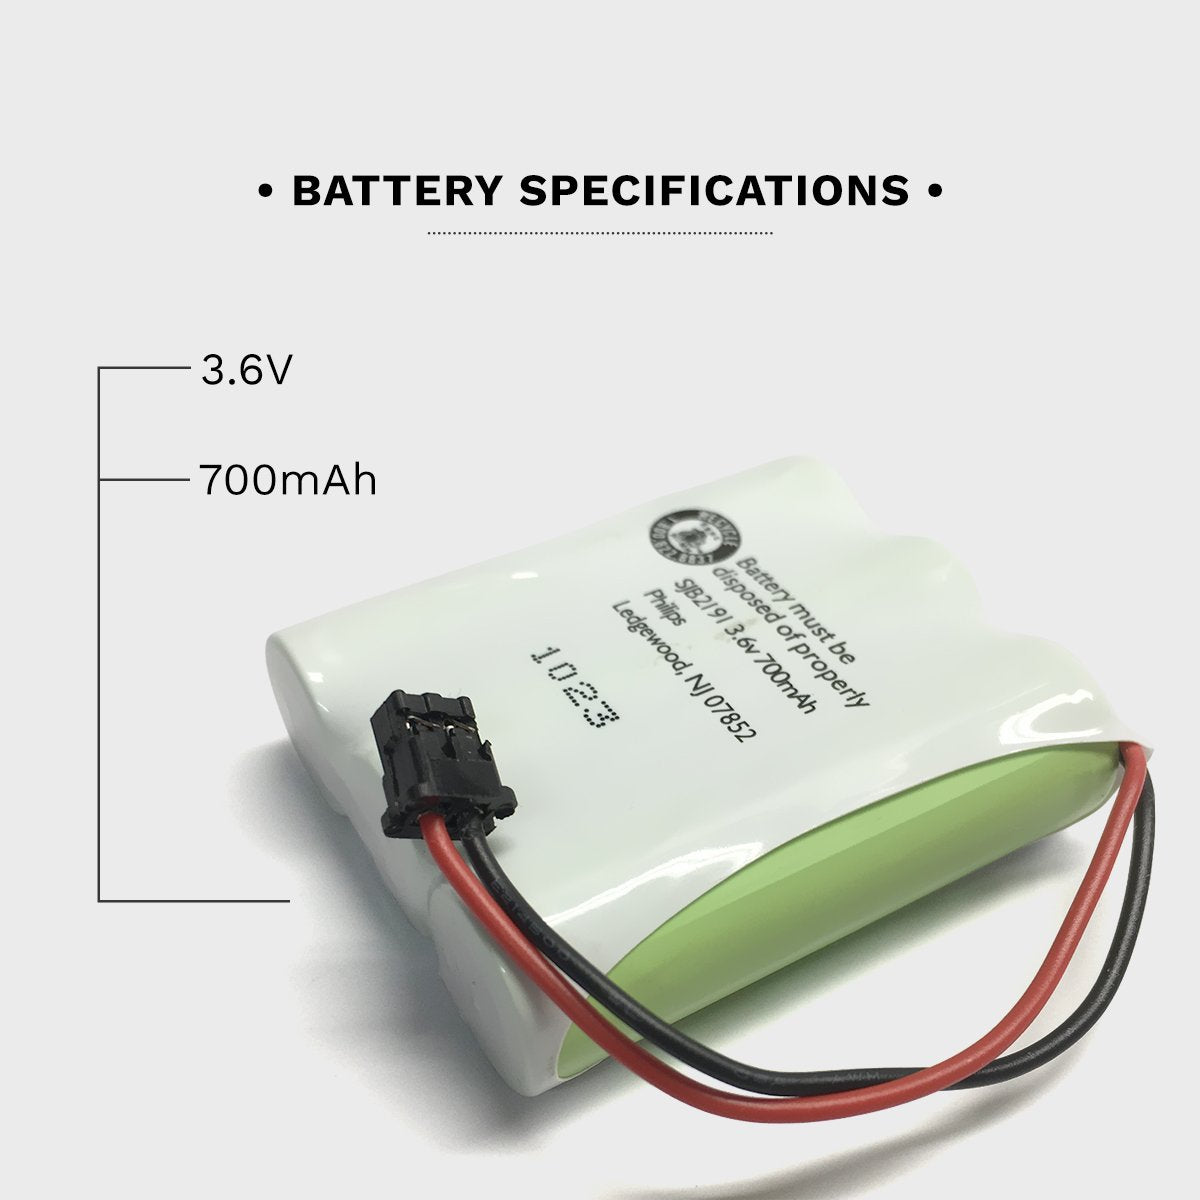 Sharp CL-410 Cordless Phone Battery